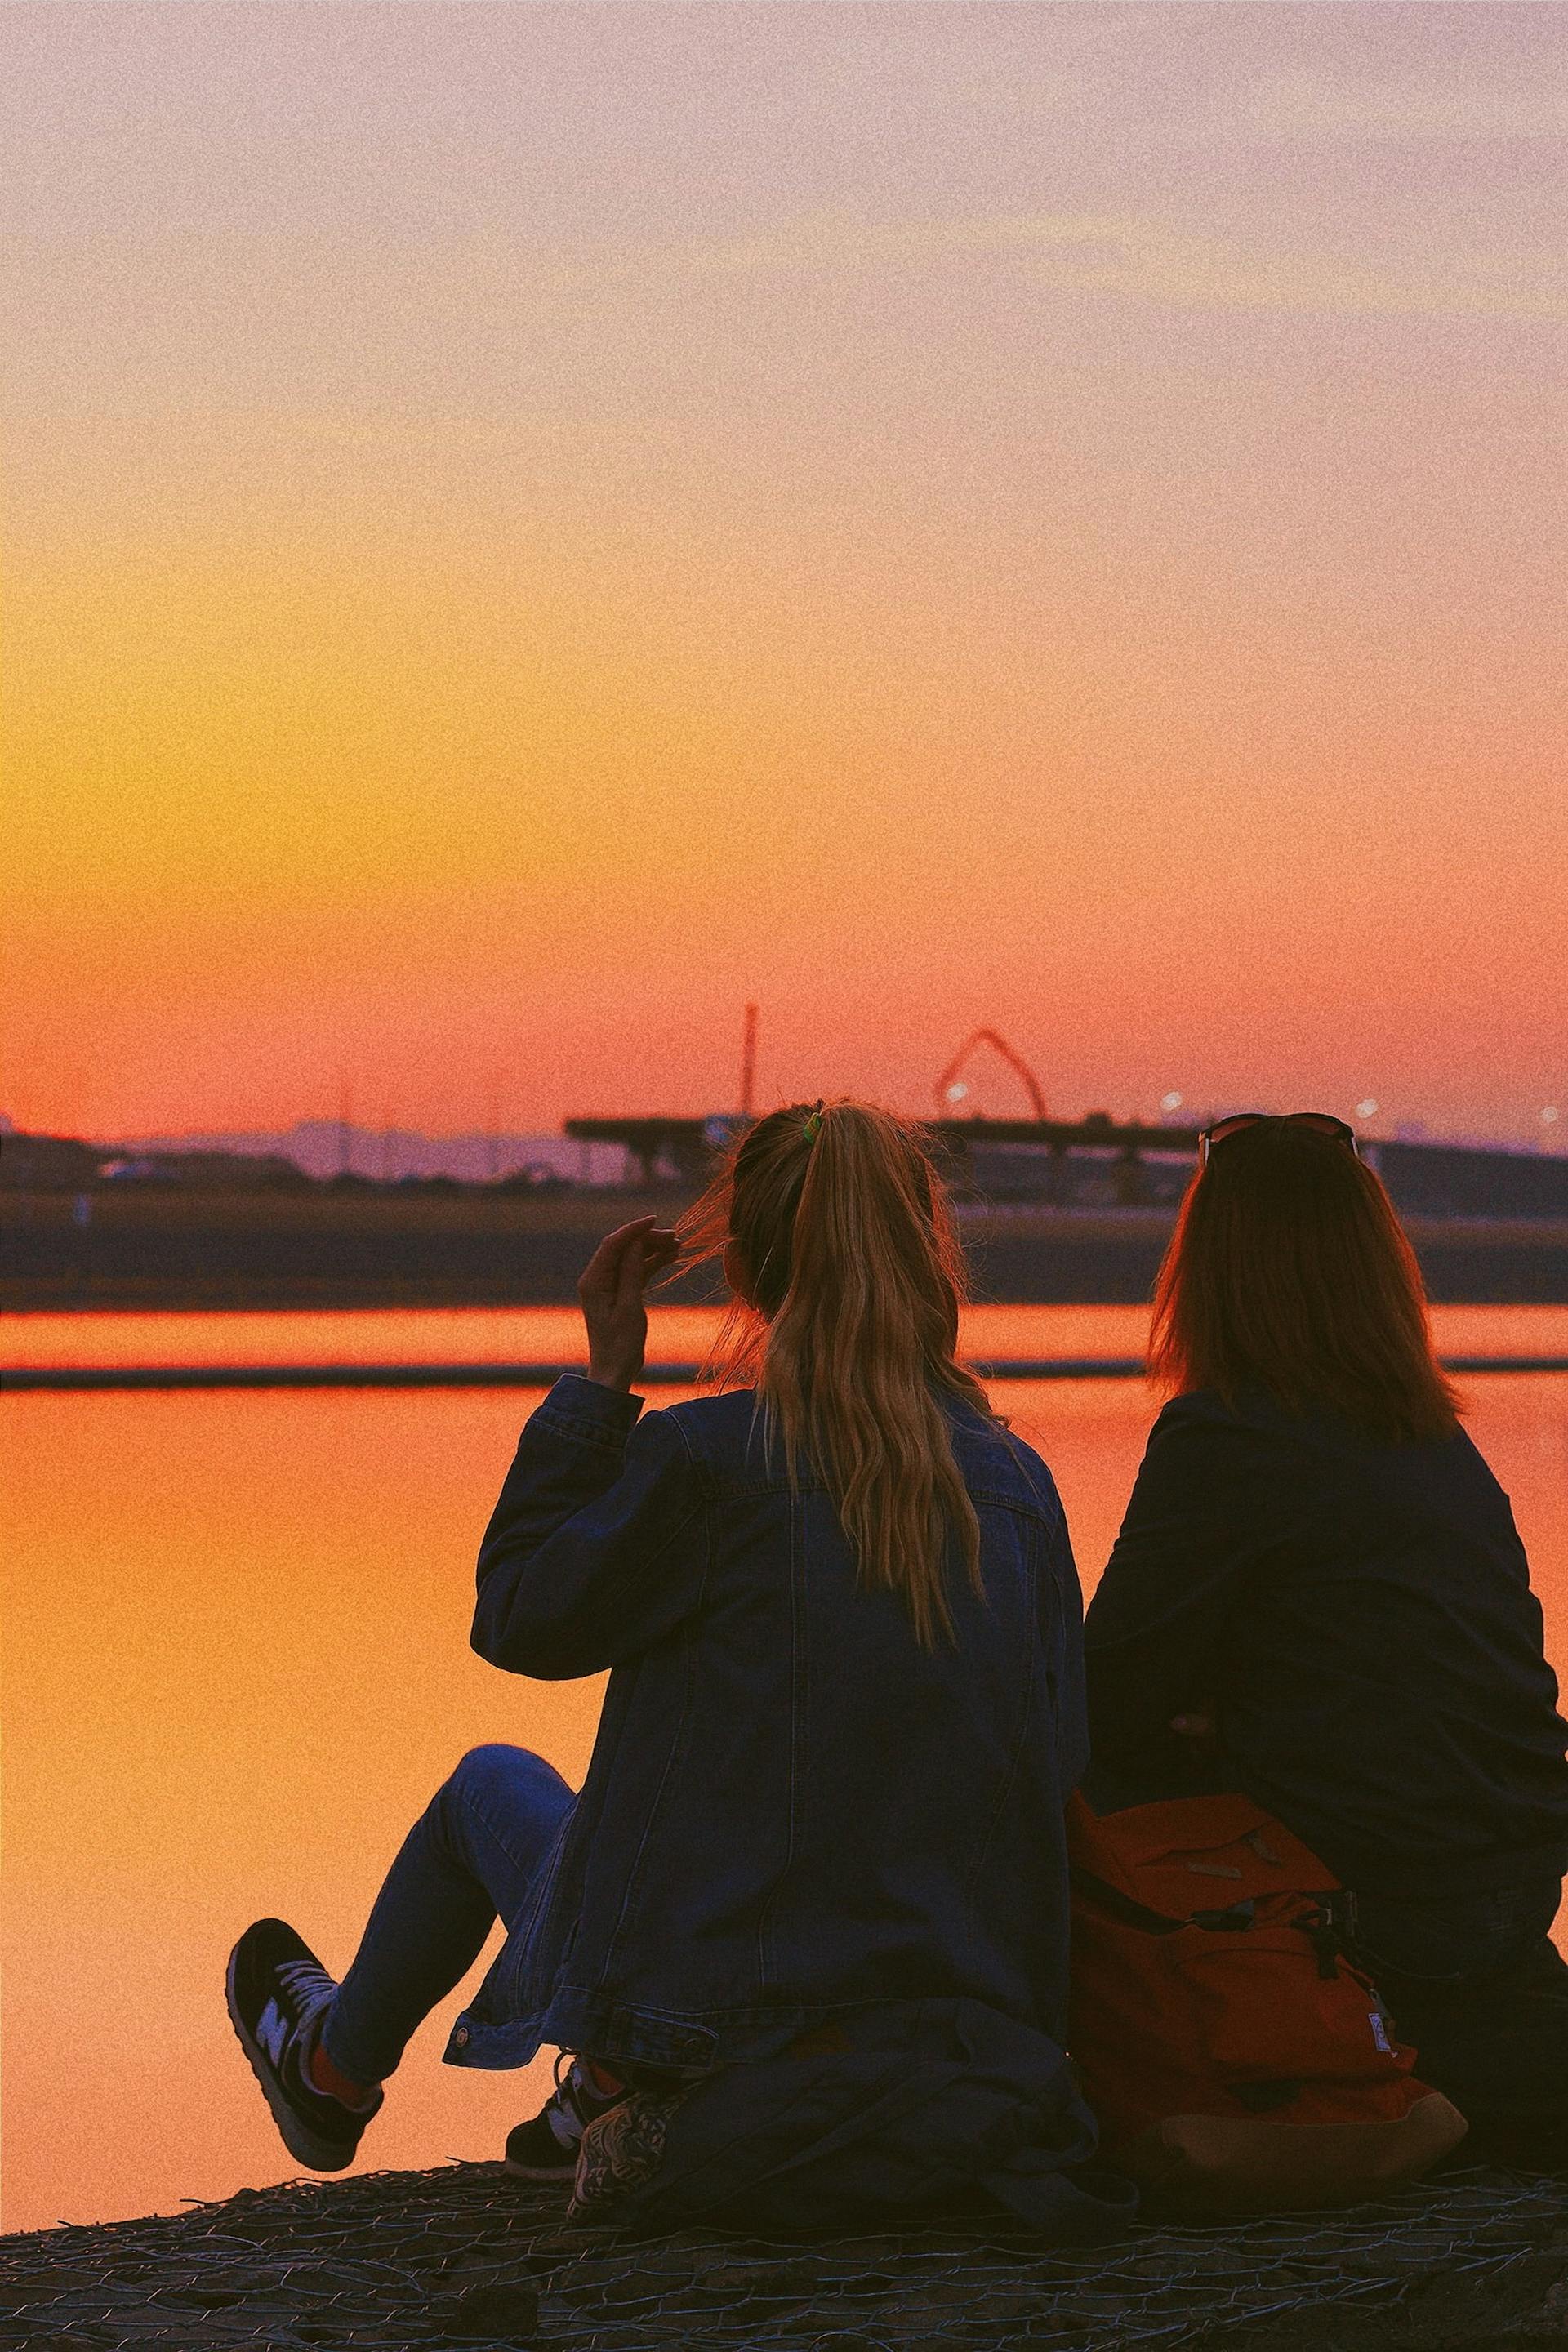 Two teenage girls sitting by a lake | Source: Pexels